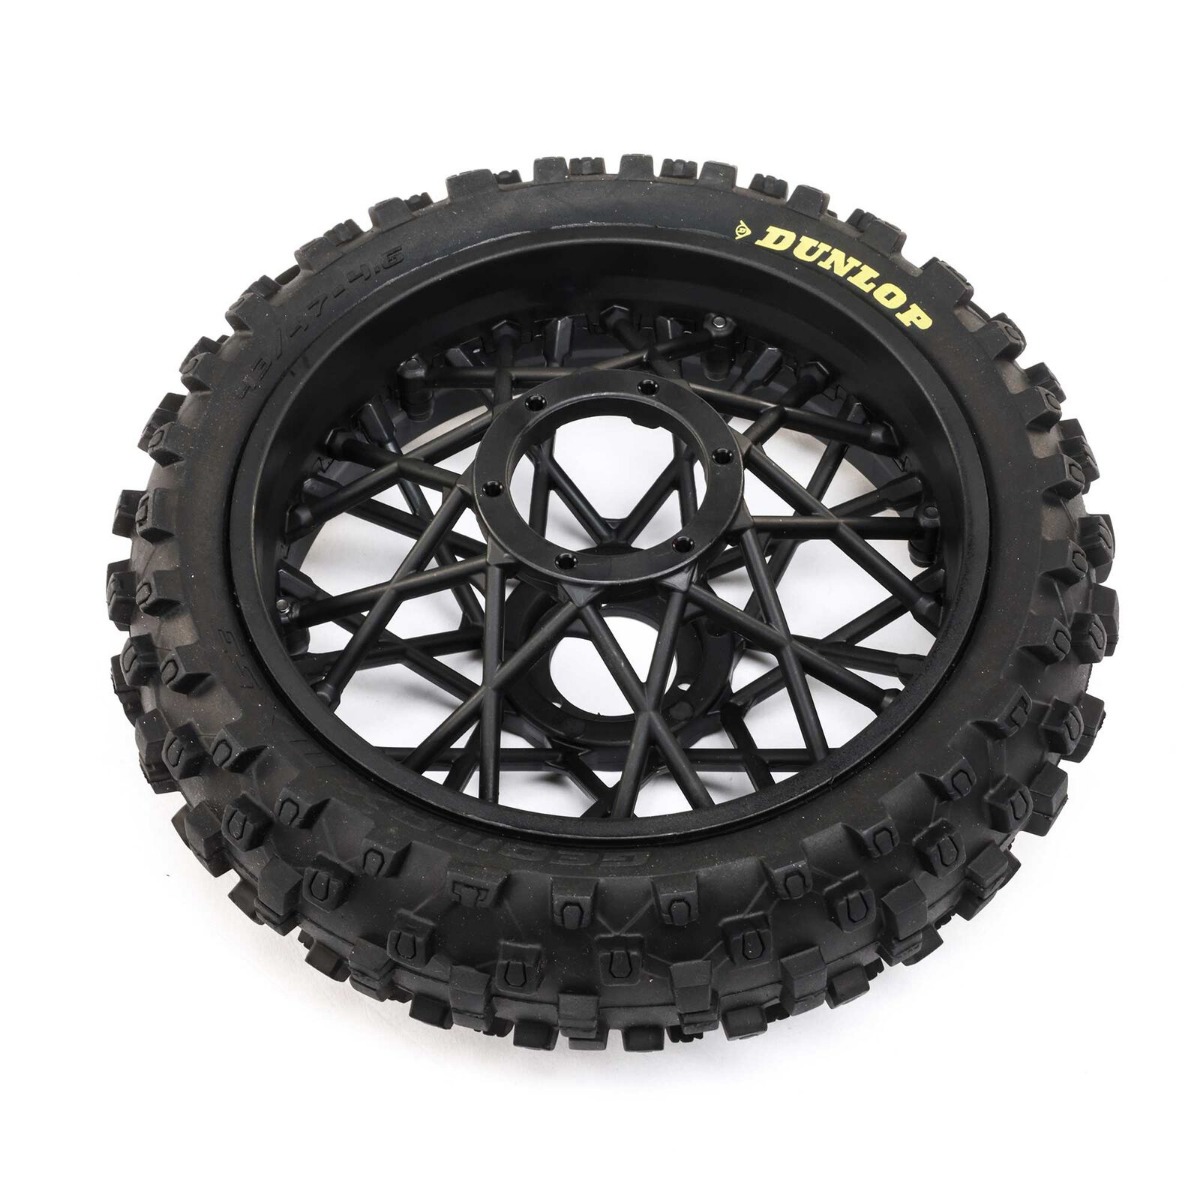 Losi - Dunlop MX53 Rear Tire Mounted, Black: Promoto-MX (LOS46005)